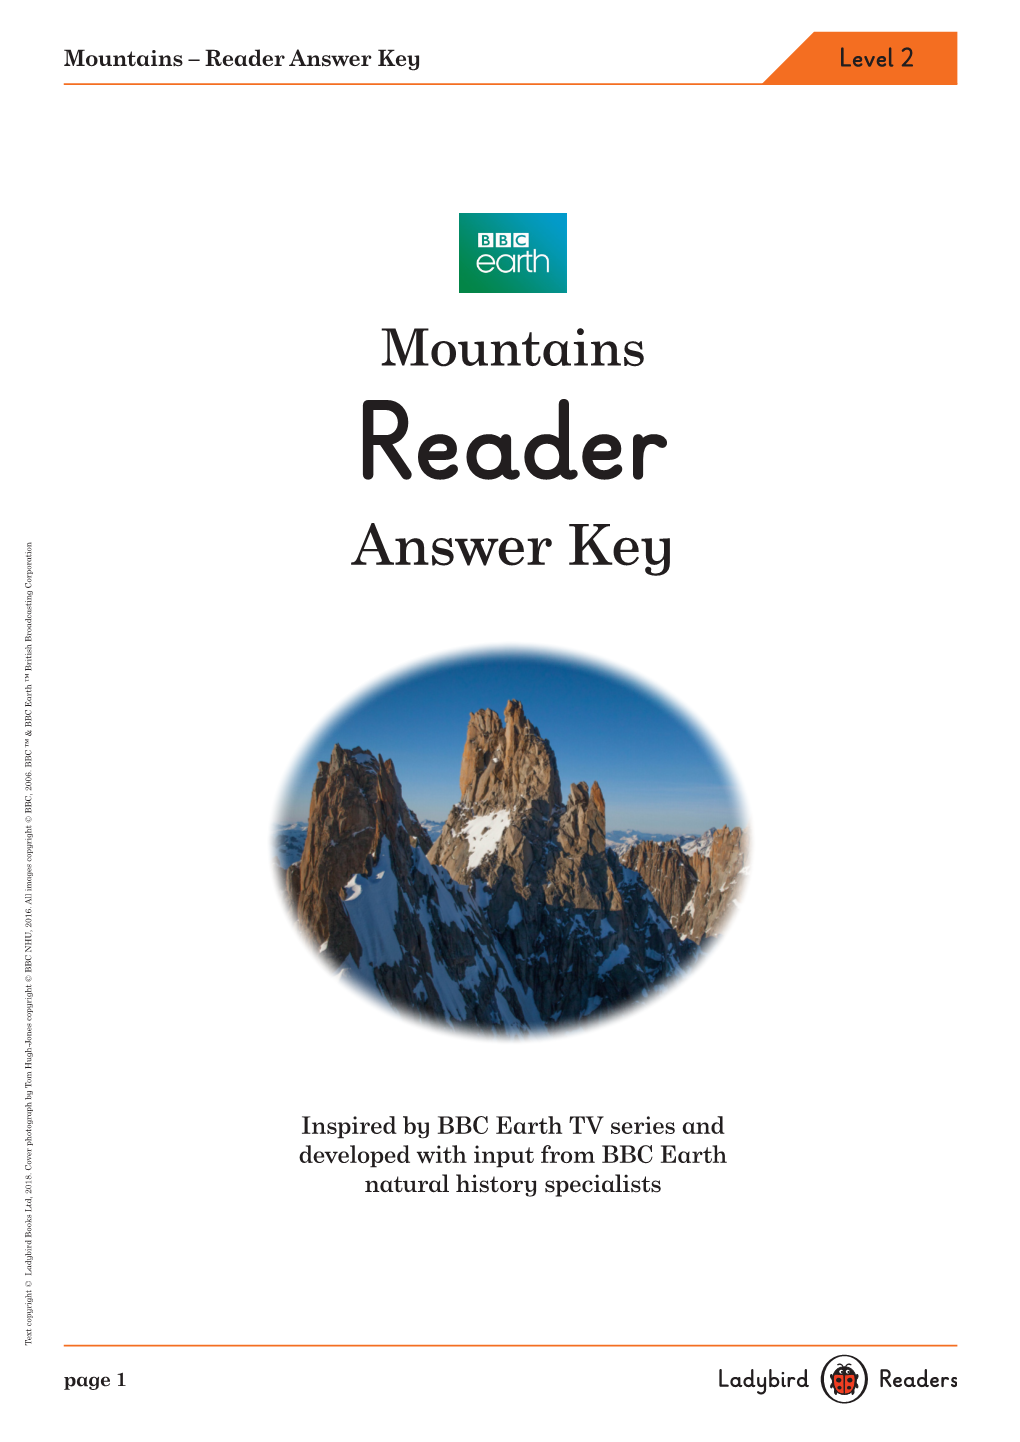 Reader Answer Key Level 2